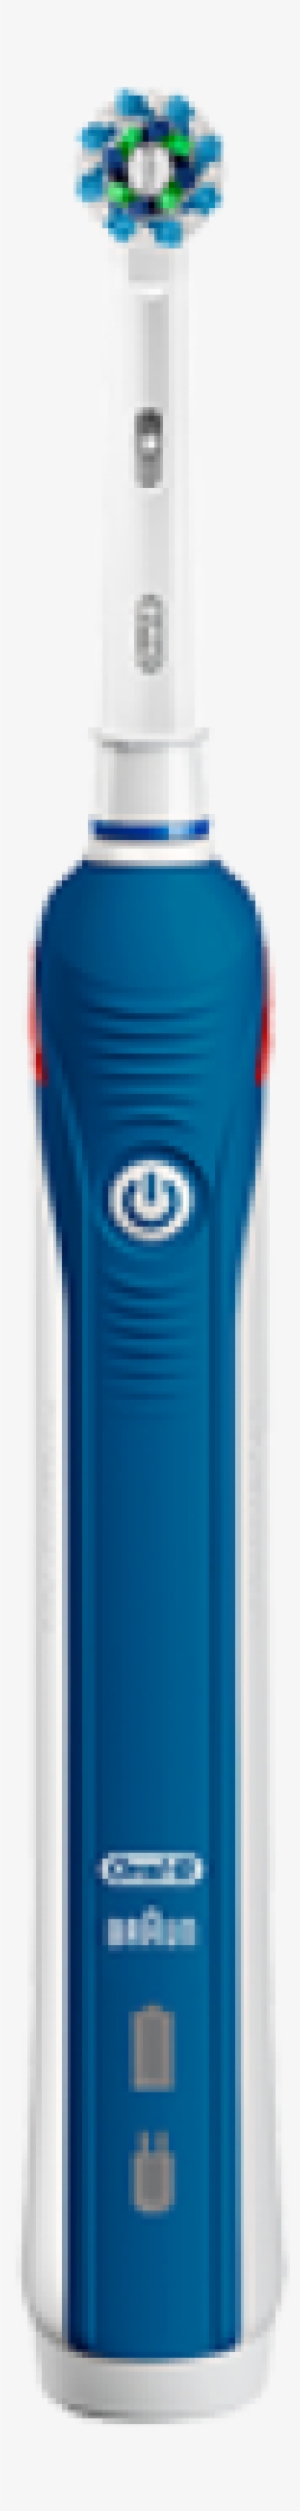 Tooth Brush Png Free Download - Braun Oral B Pro 3000 D215354m Electric Toothbrush